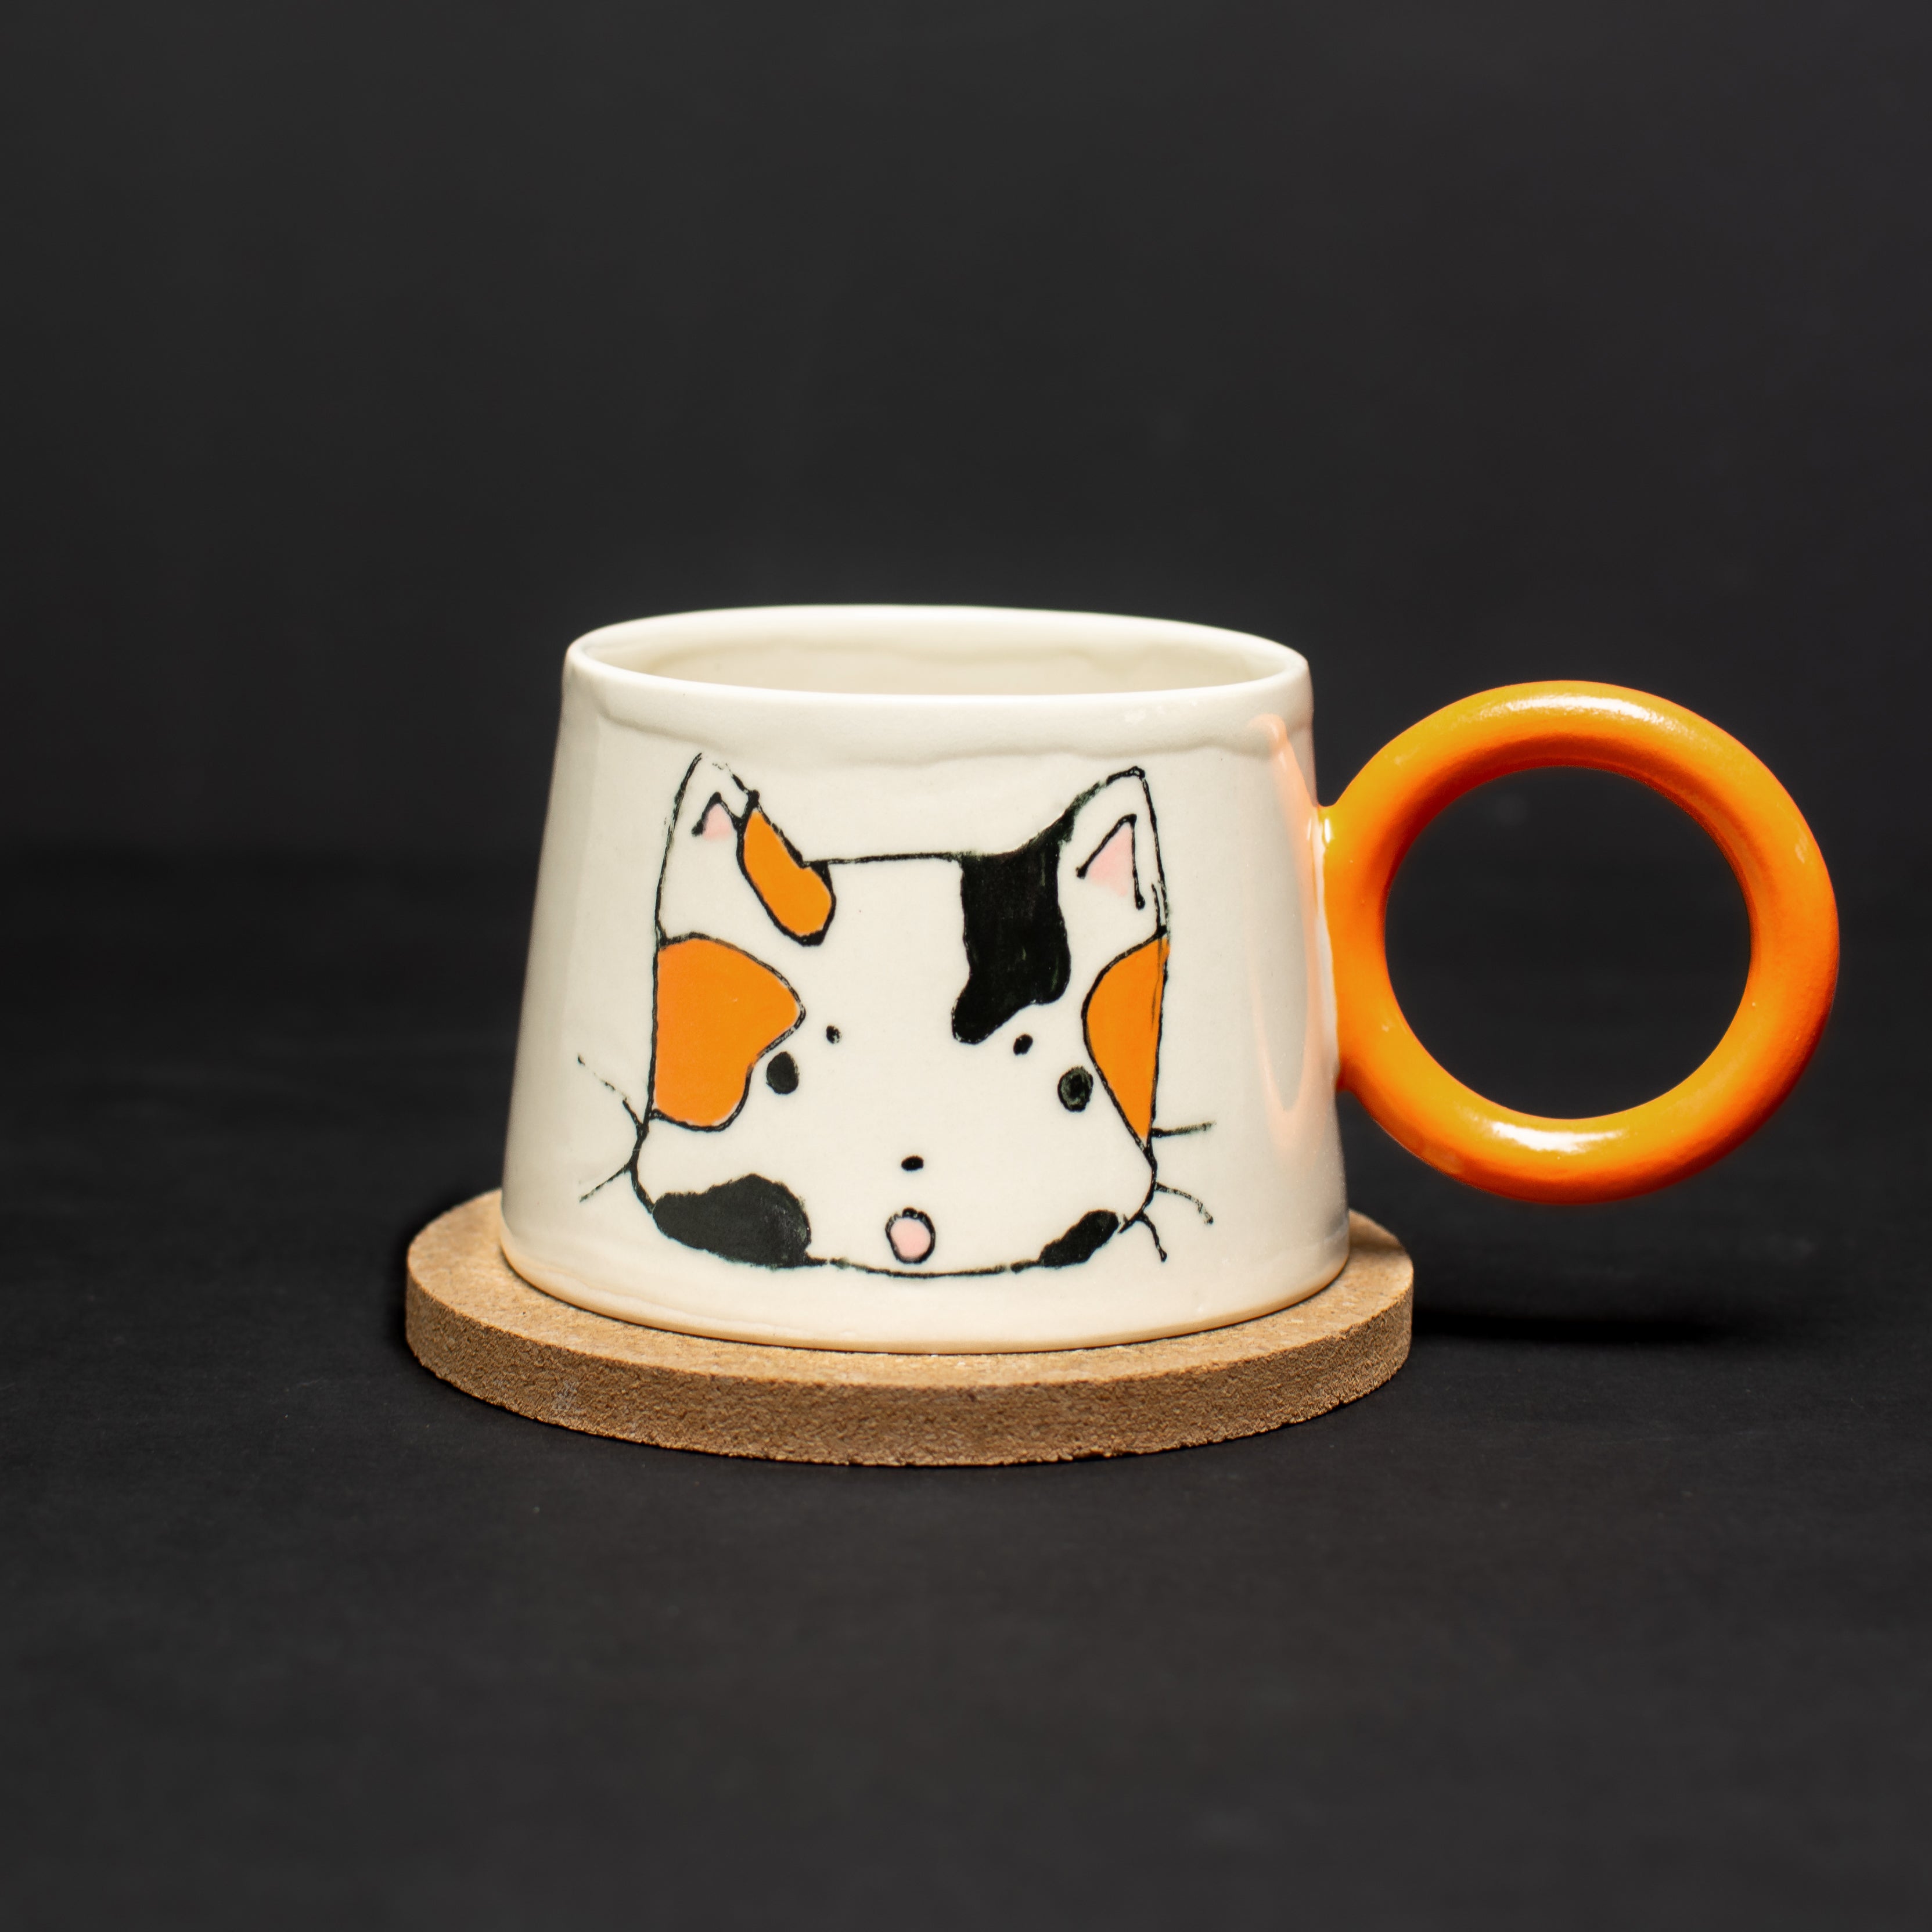 Plate - 14cm - Porcelain - Mino Yaki - made in Japan - Totoro & Sakura -  Ghibli - 2015 (new) | Pottery painting, Totoro, Ceramic painting